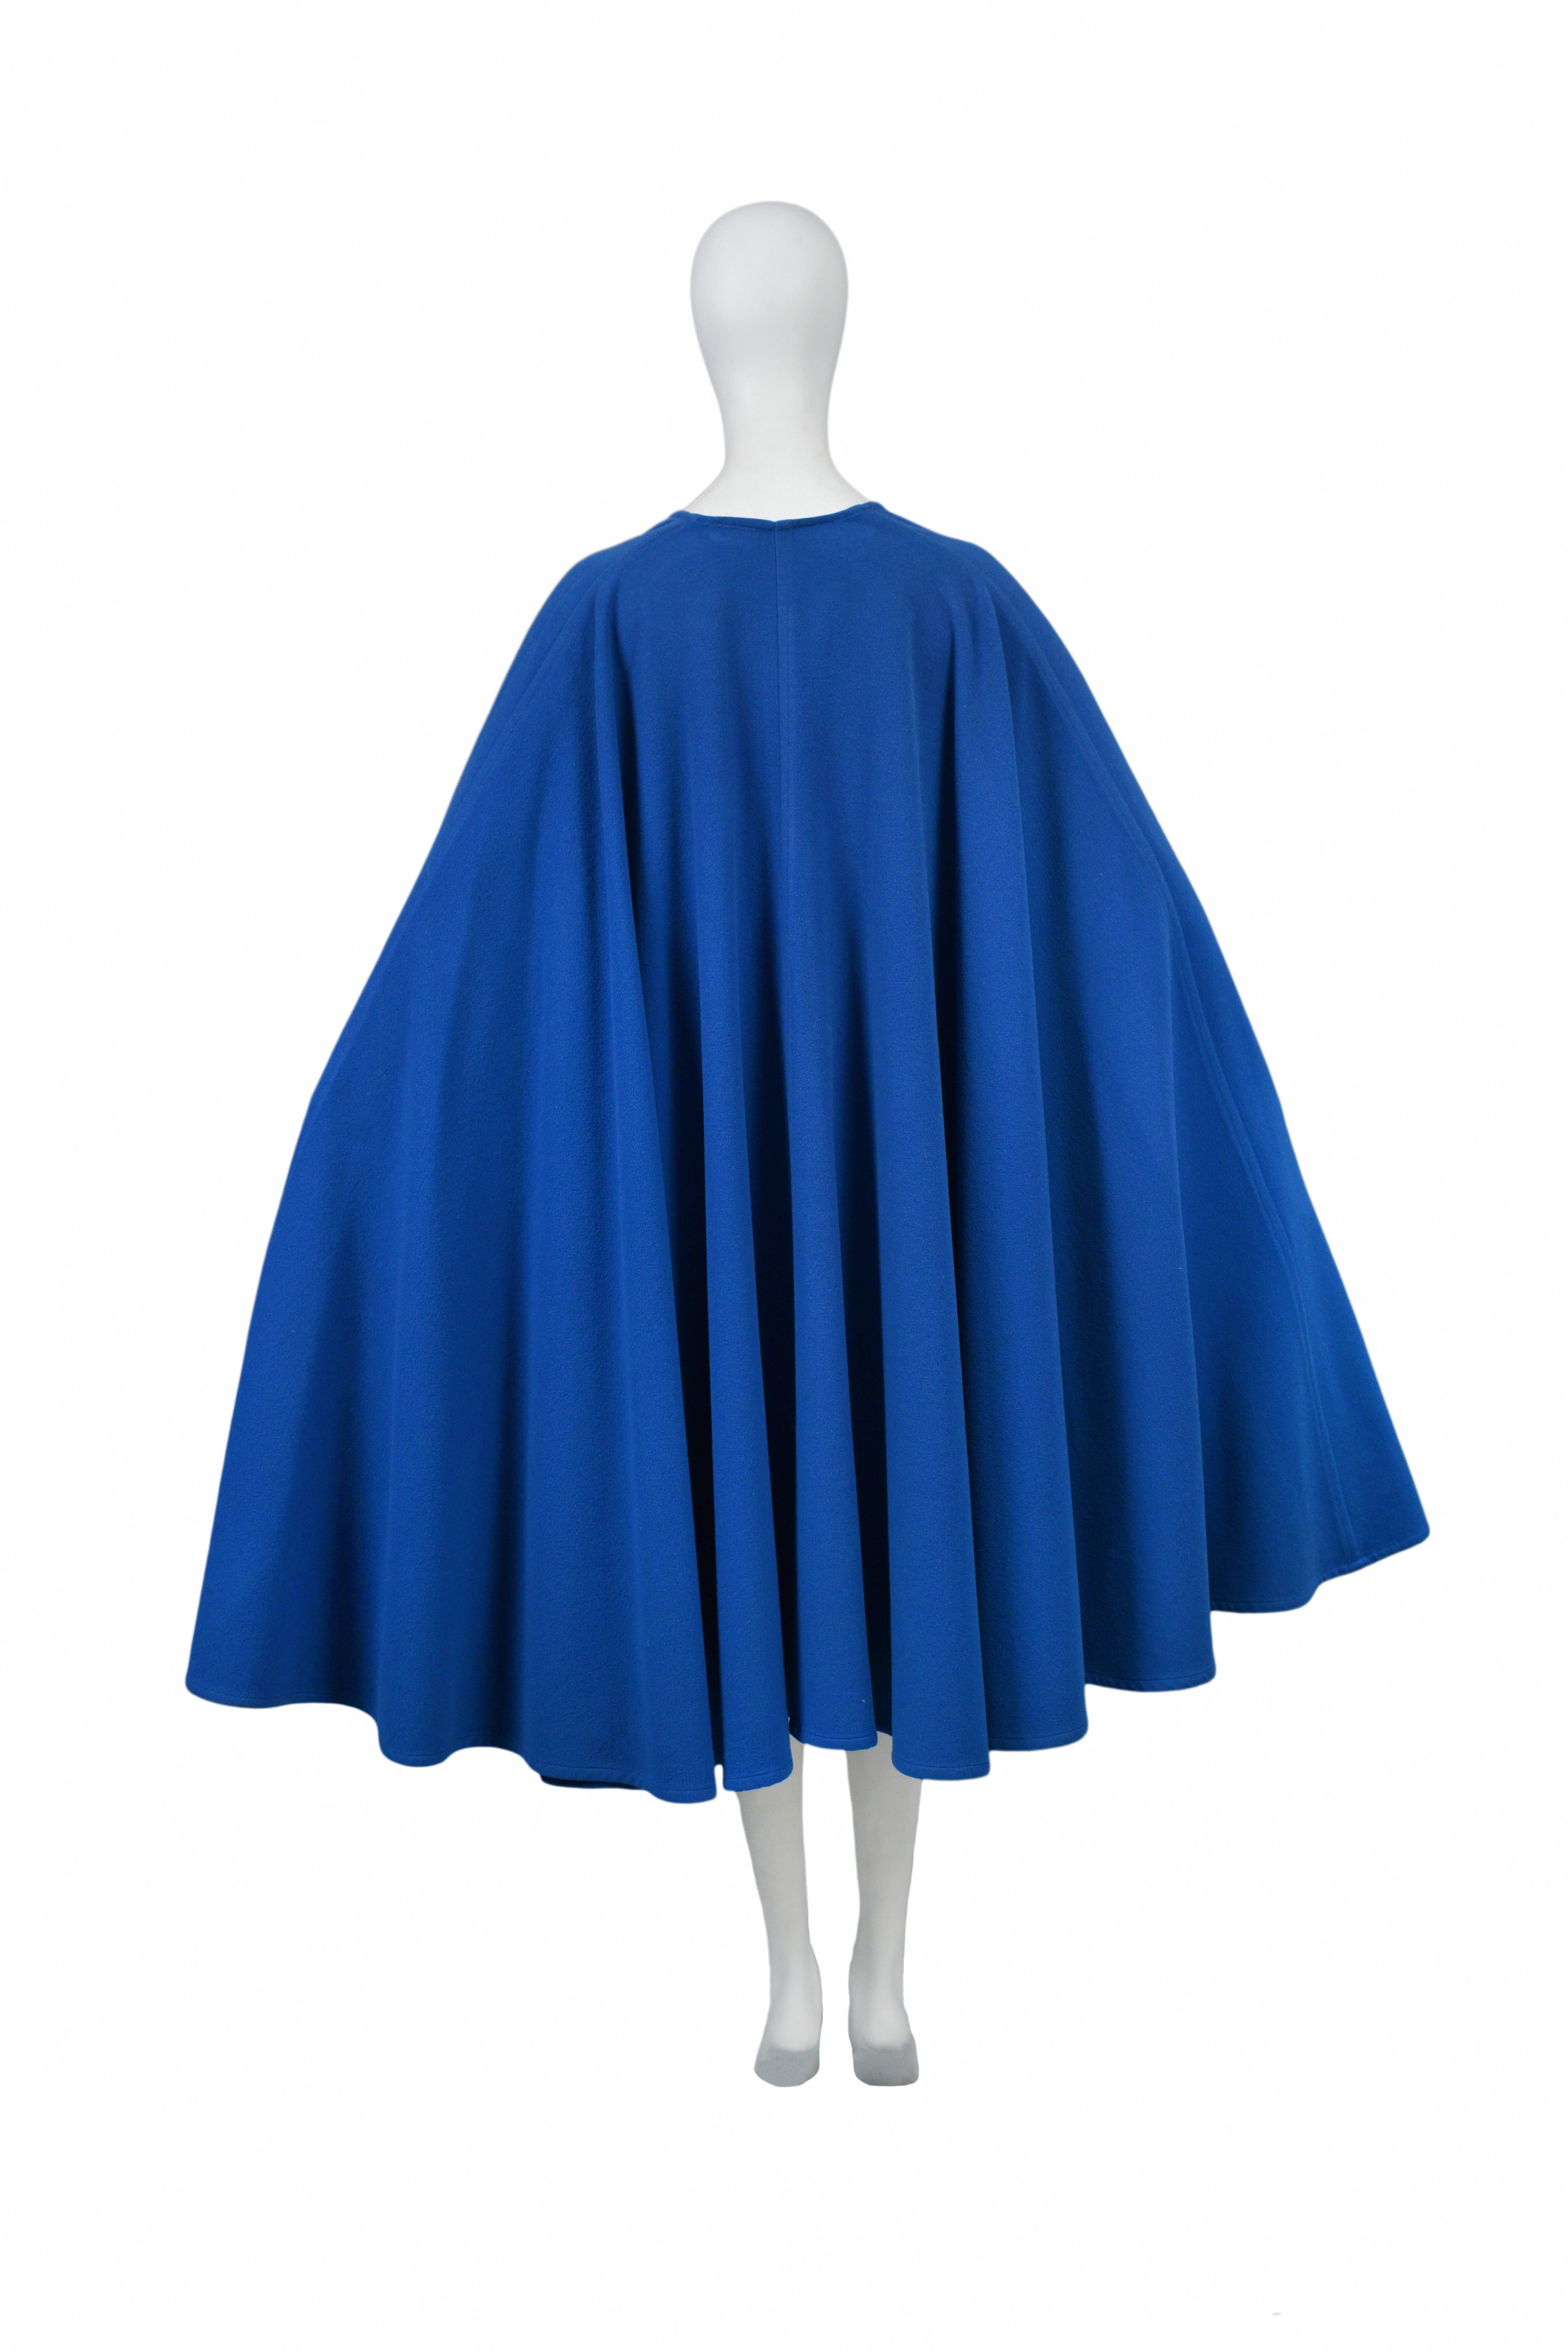 Women's Yves Saint Laurent Blue Wool Cape